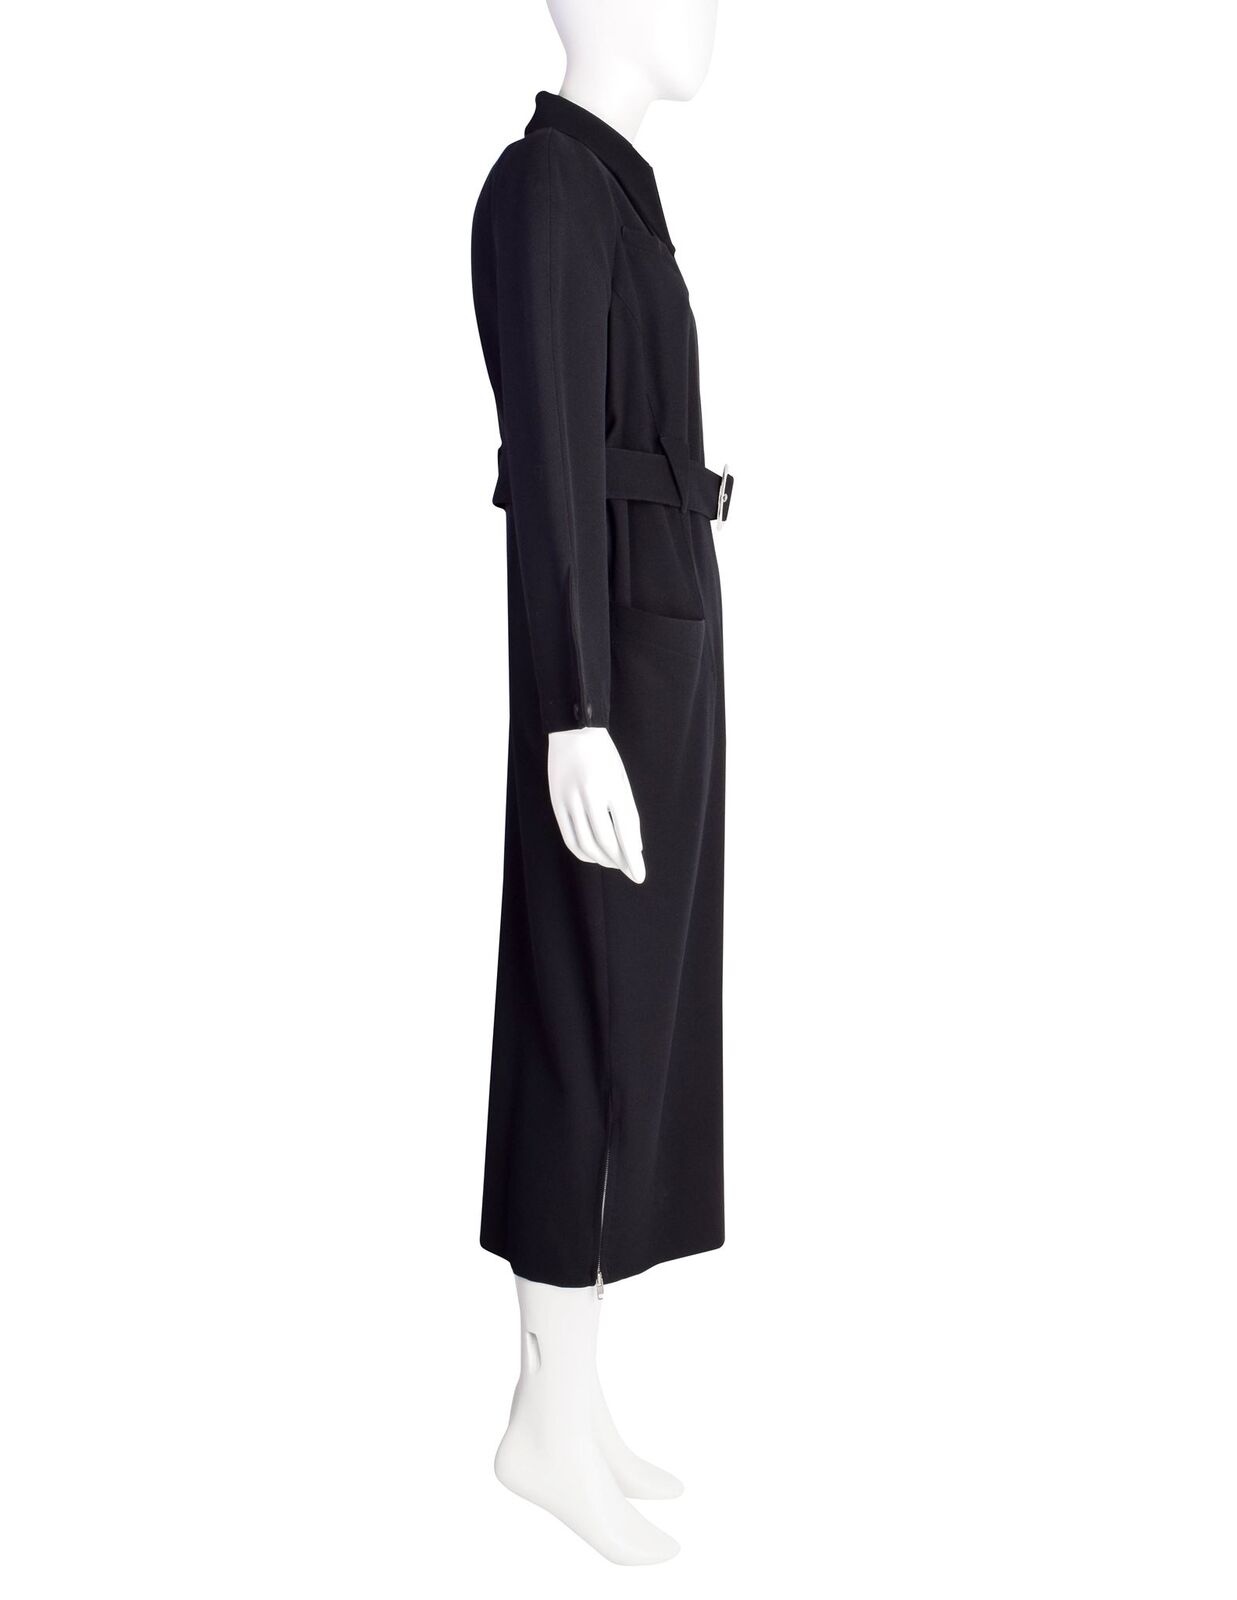 Thierry Mugler Vintage 1980s Black Wool Belted Sh… - image 10